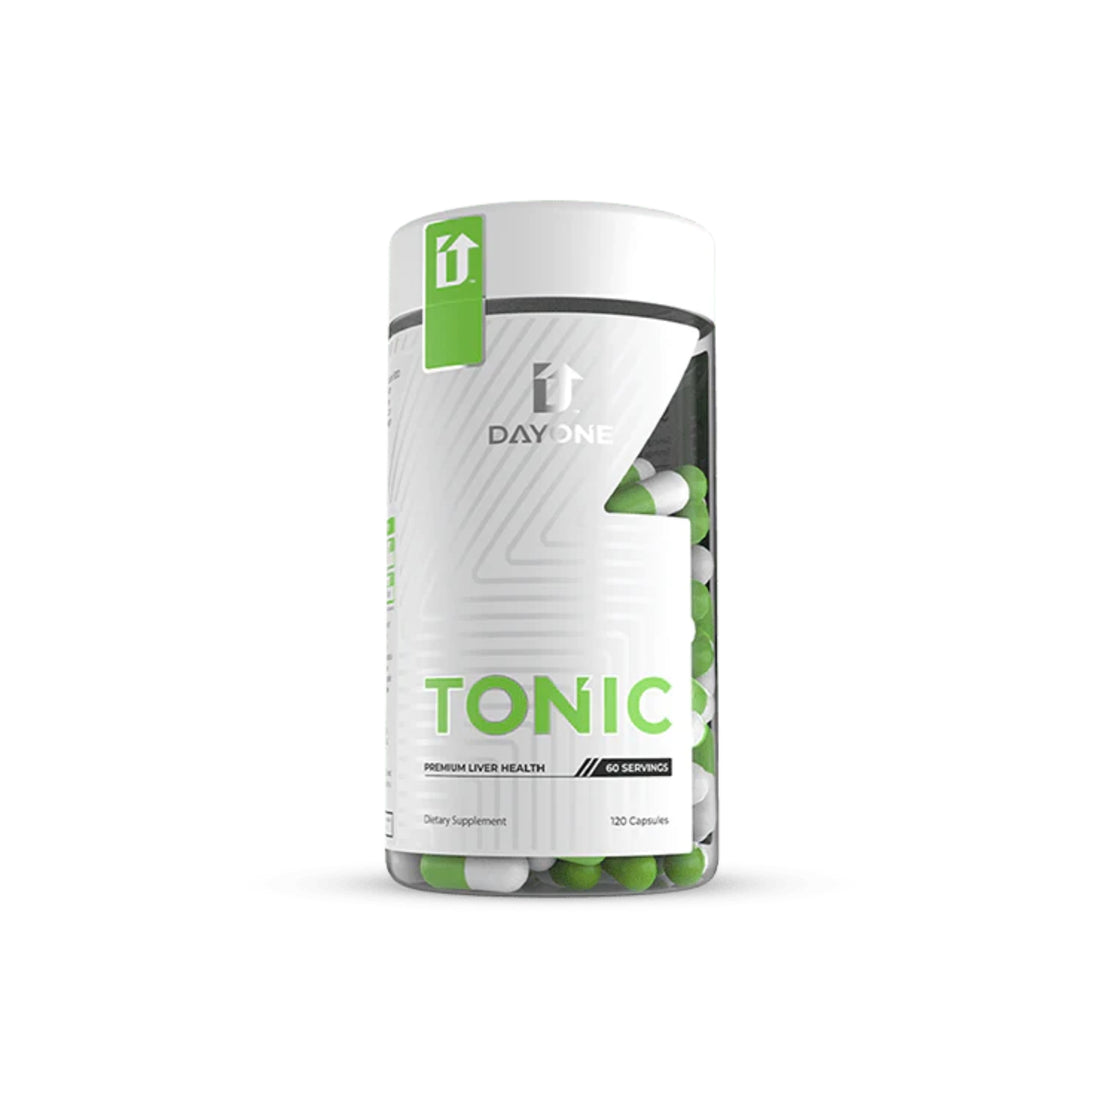 Day One Tonic Premium Liver Health